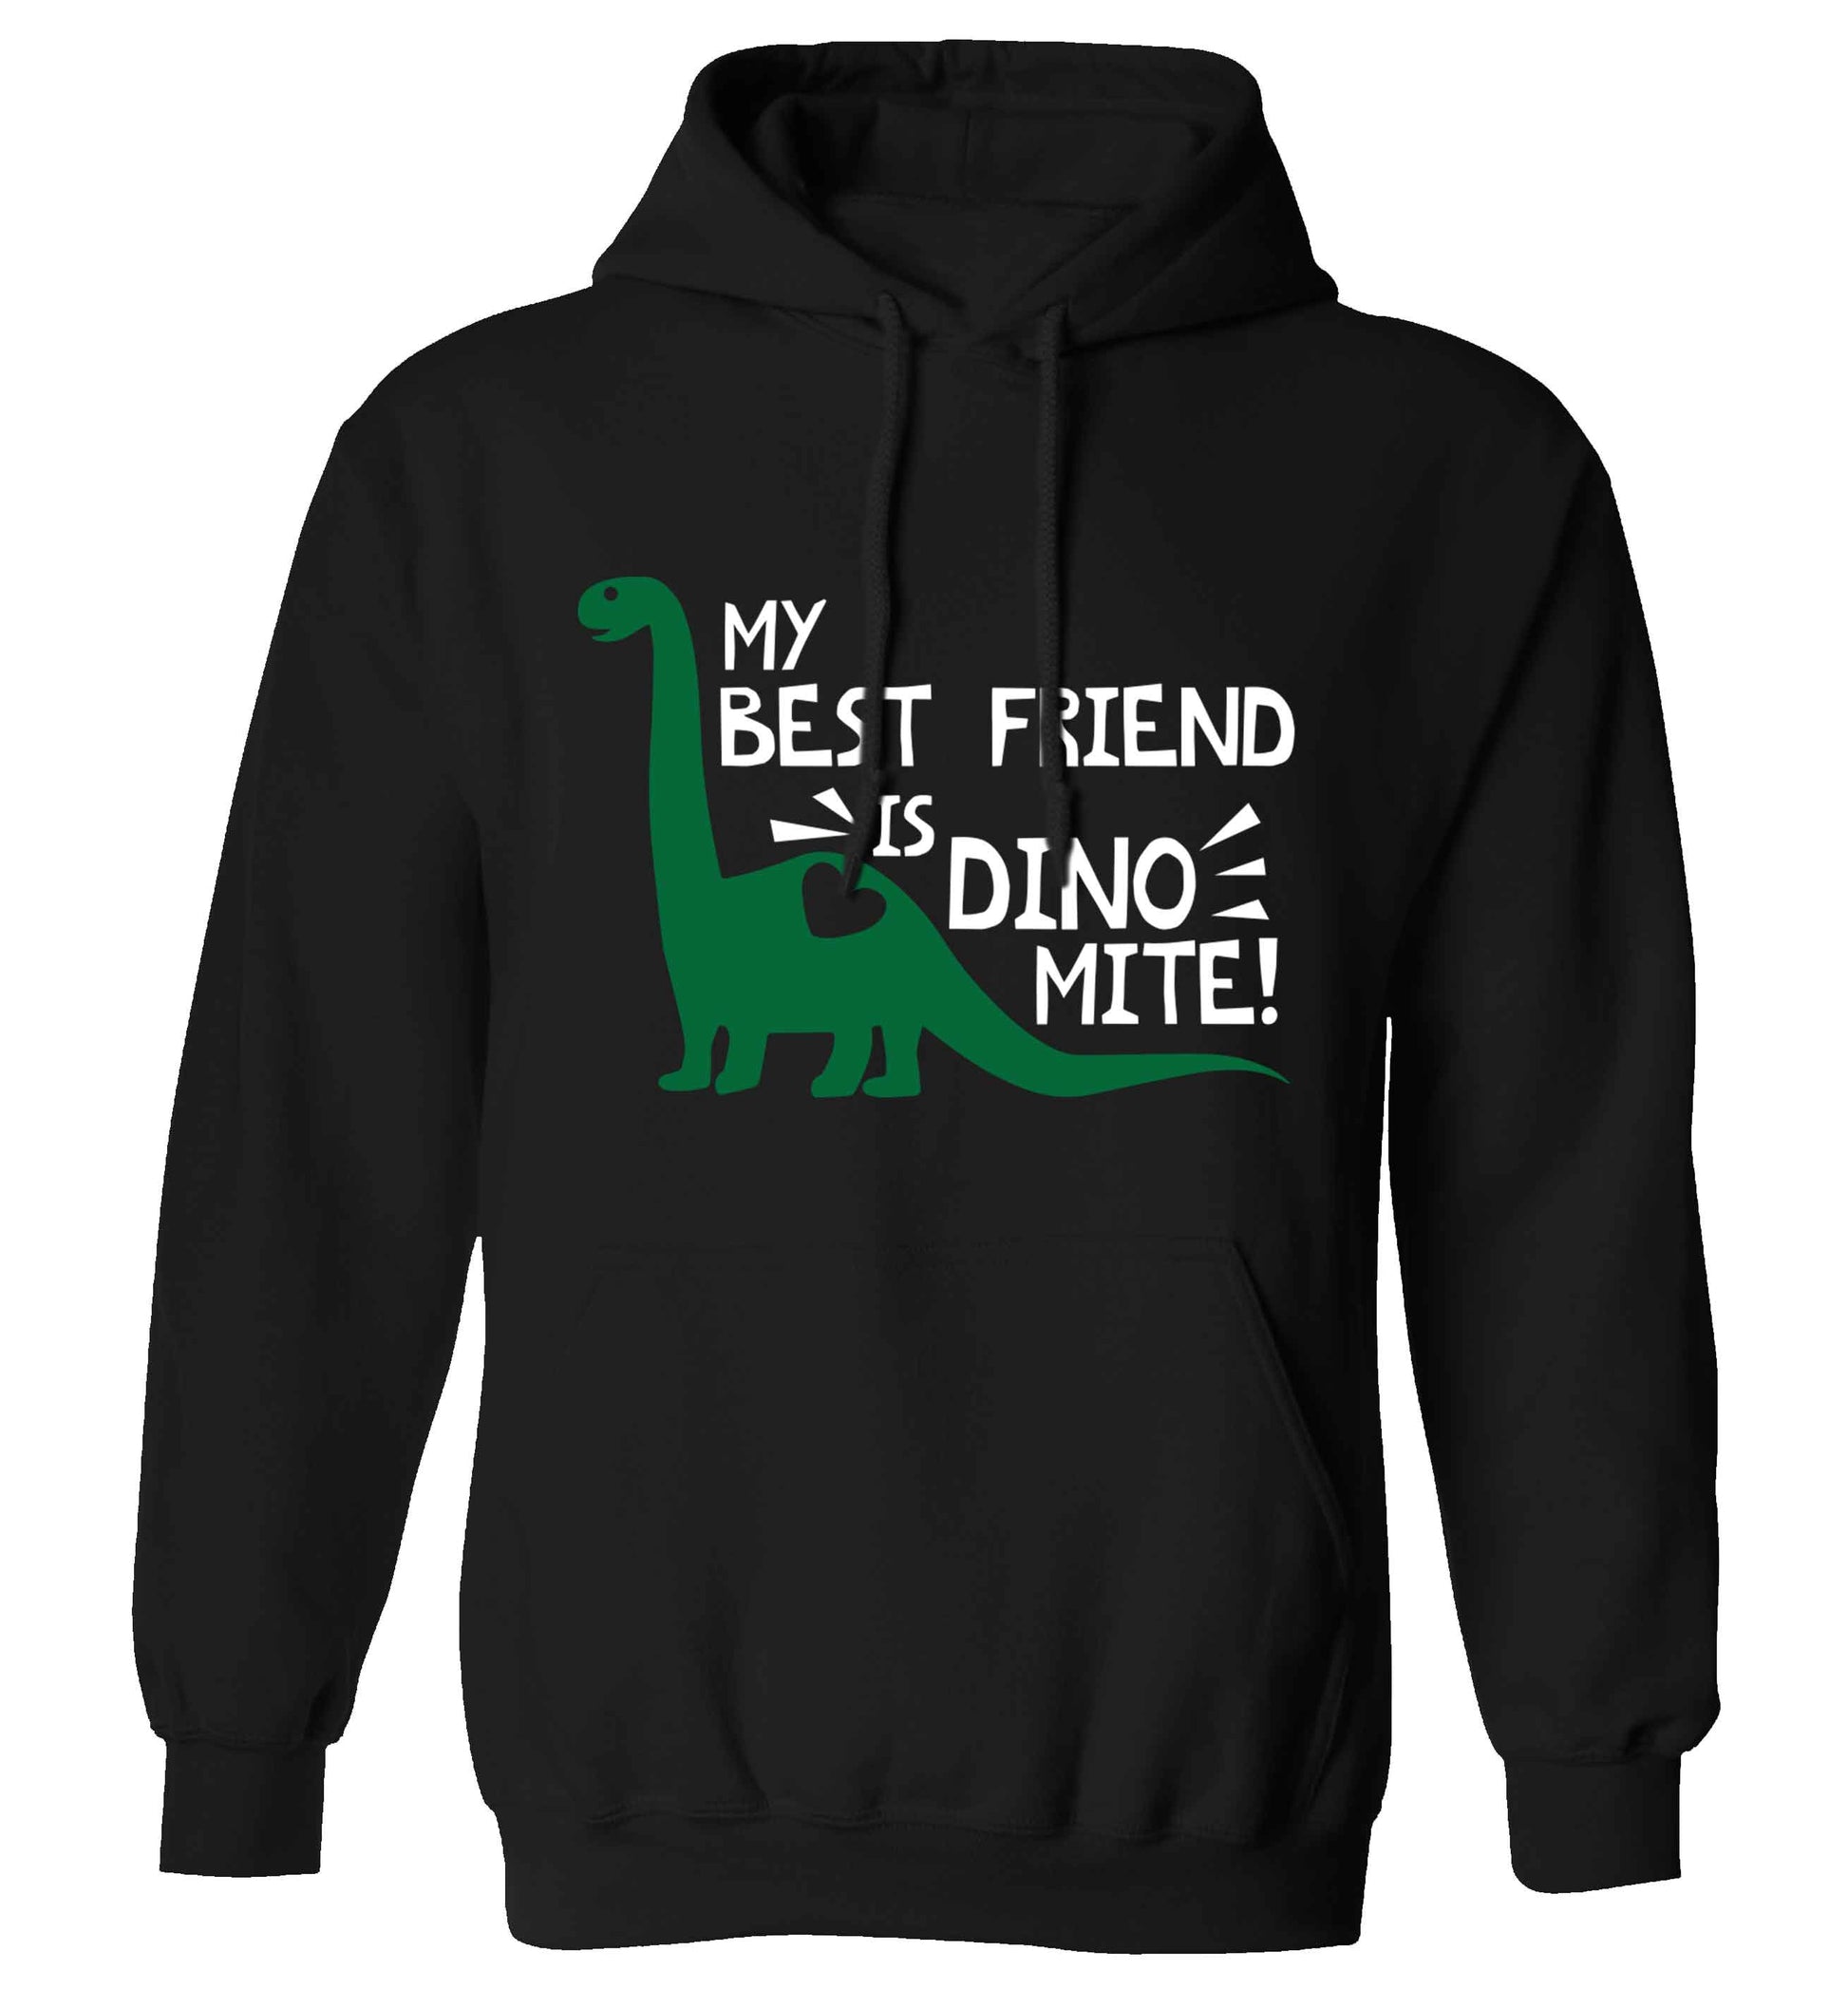 My best friend is dinomite! adults unisex black hoodie 2XL